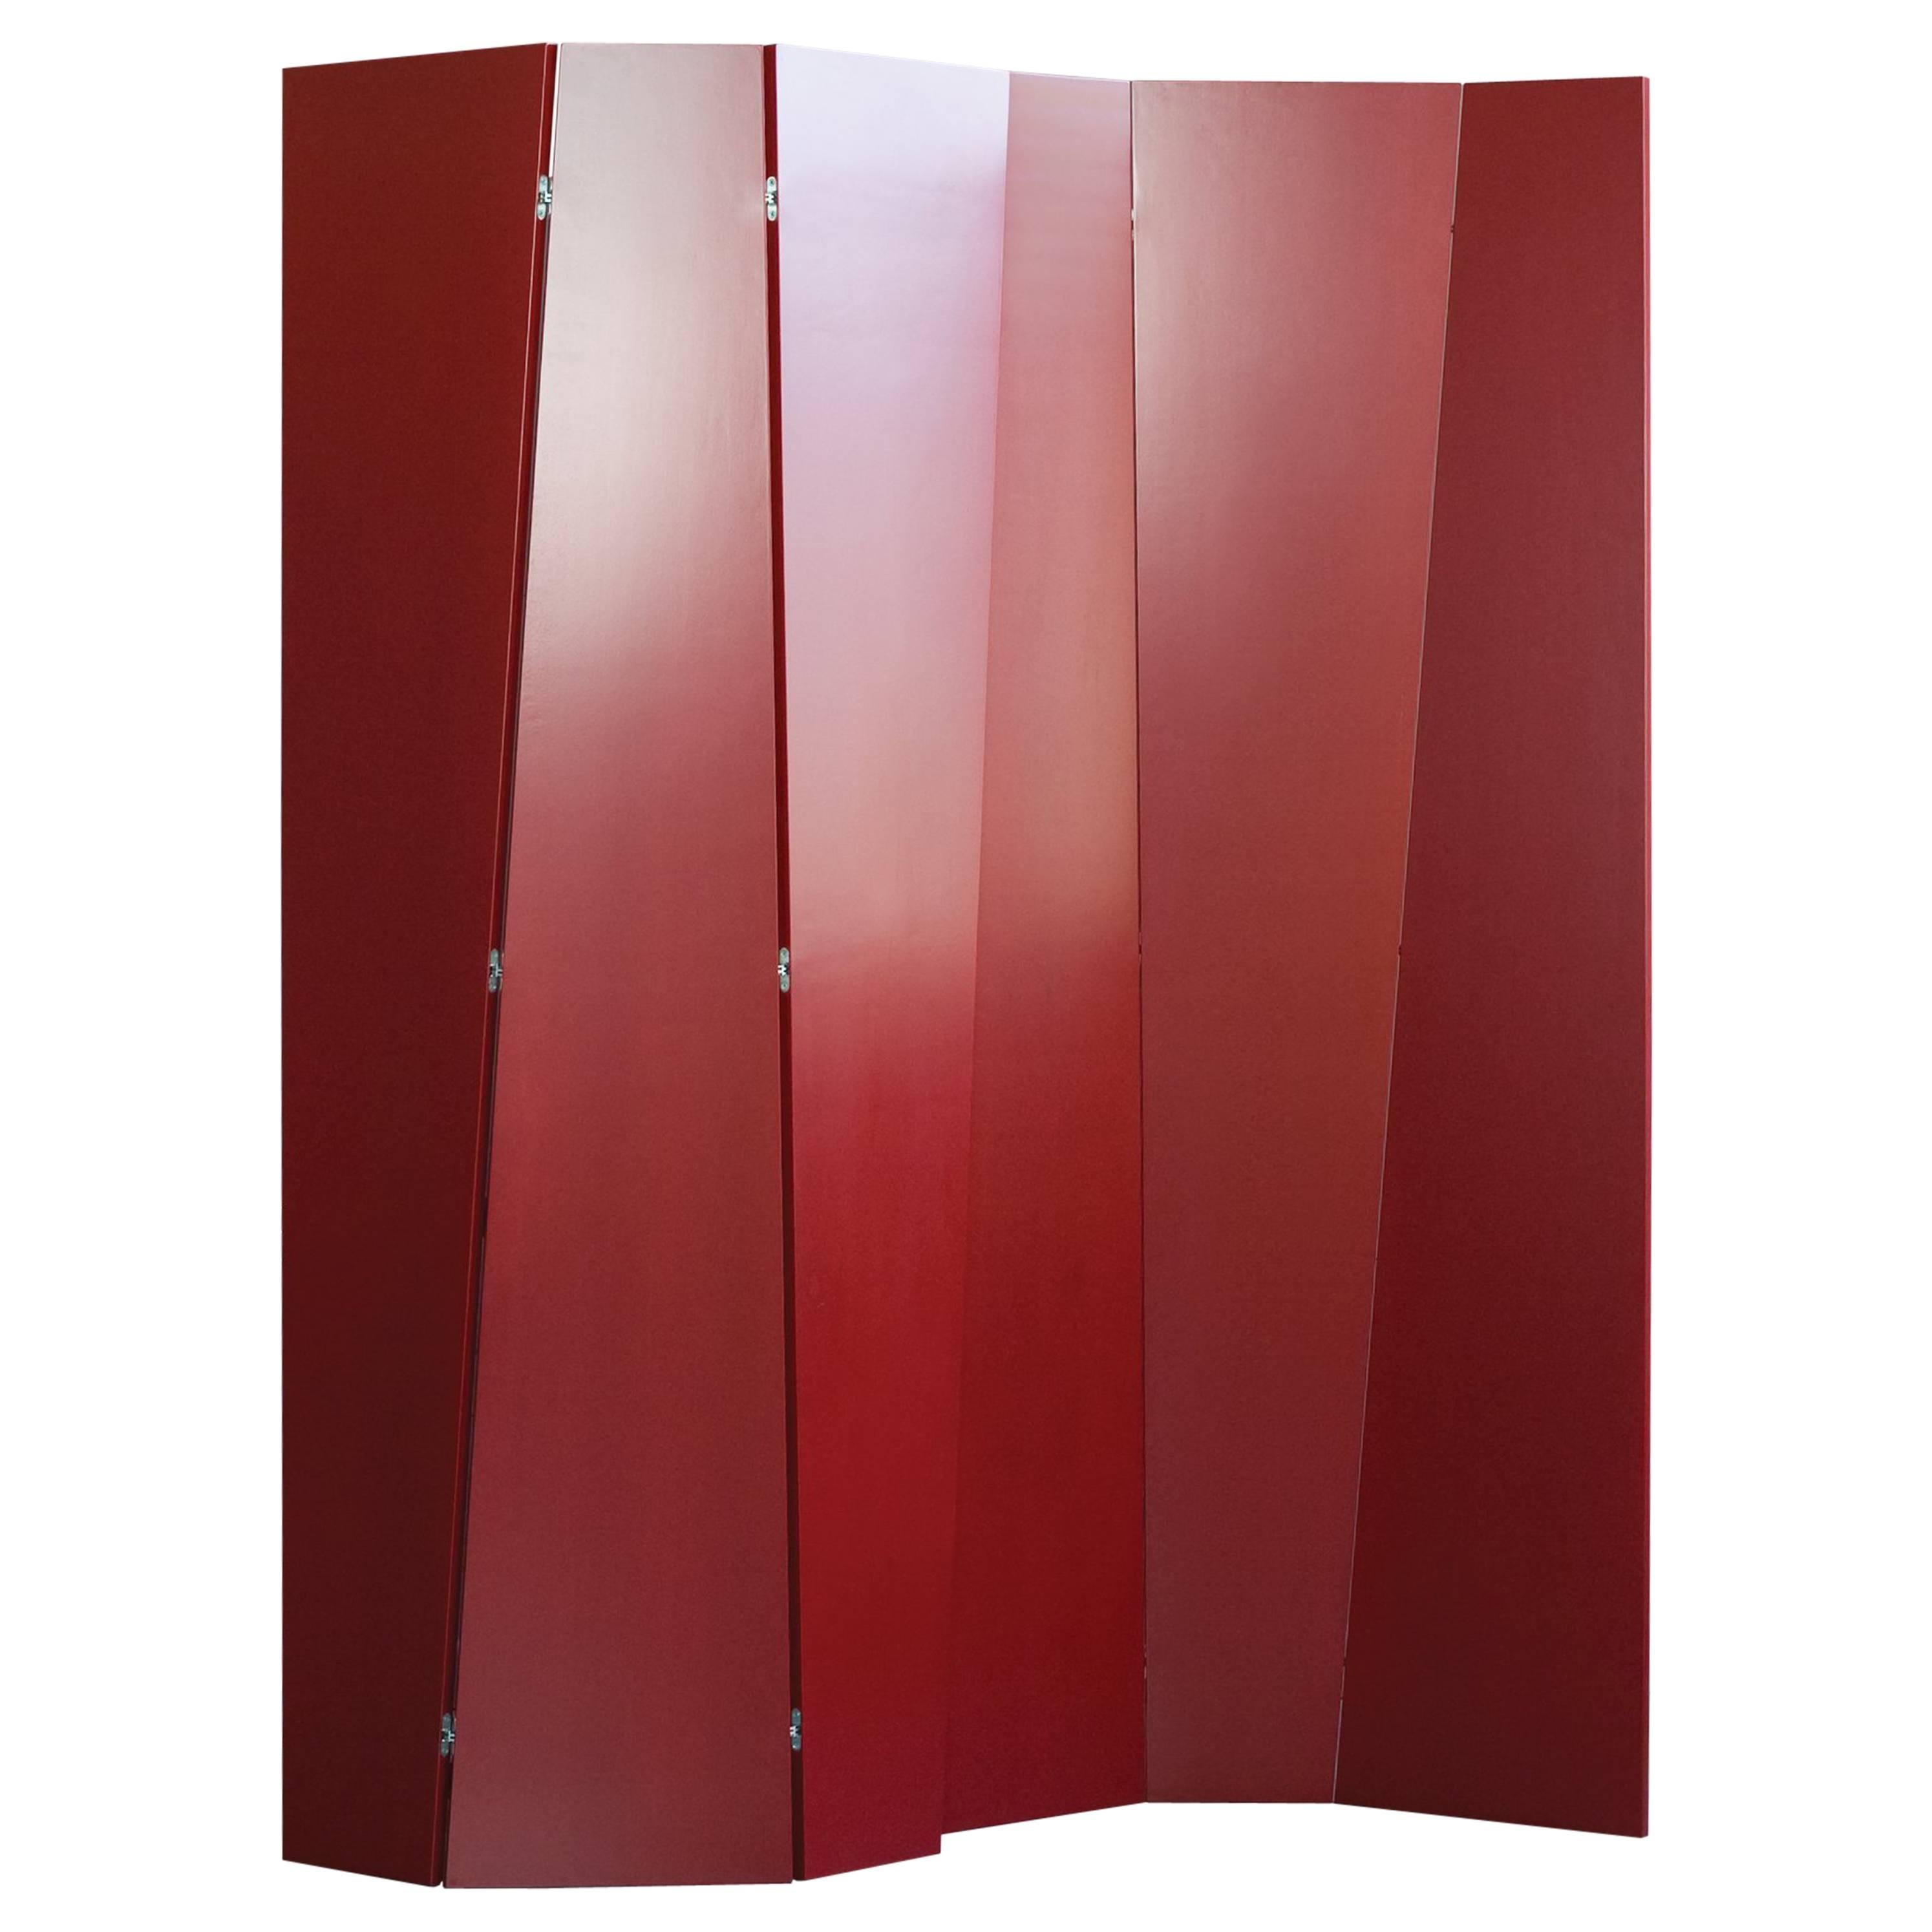 Handmade Tri-Fold Opaque Lacquer Folding Screen / Room Divider